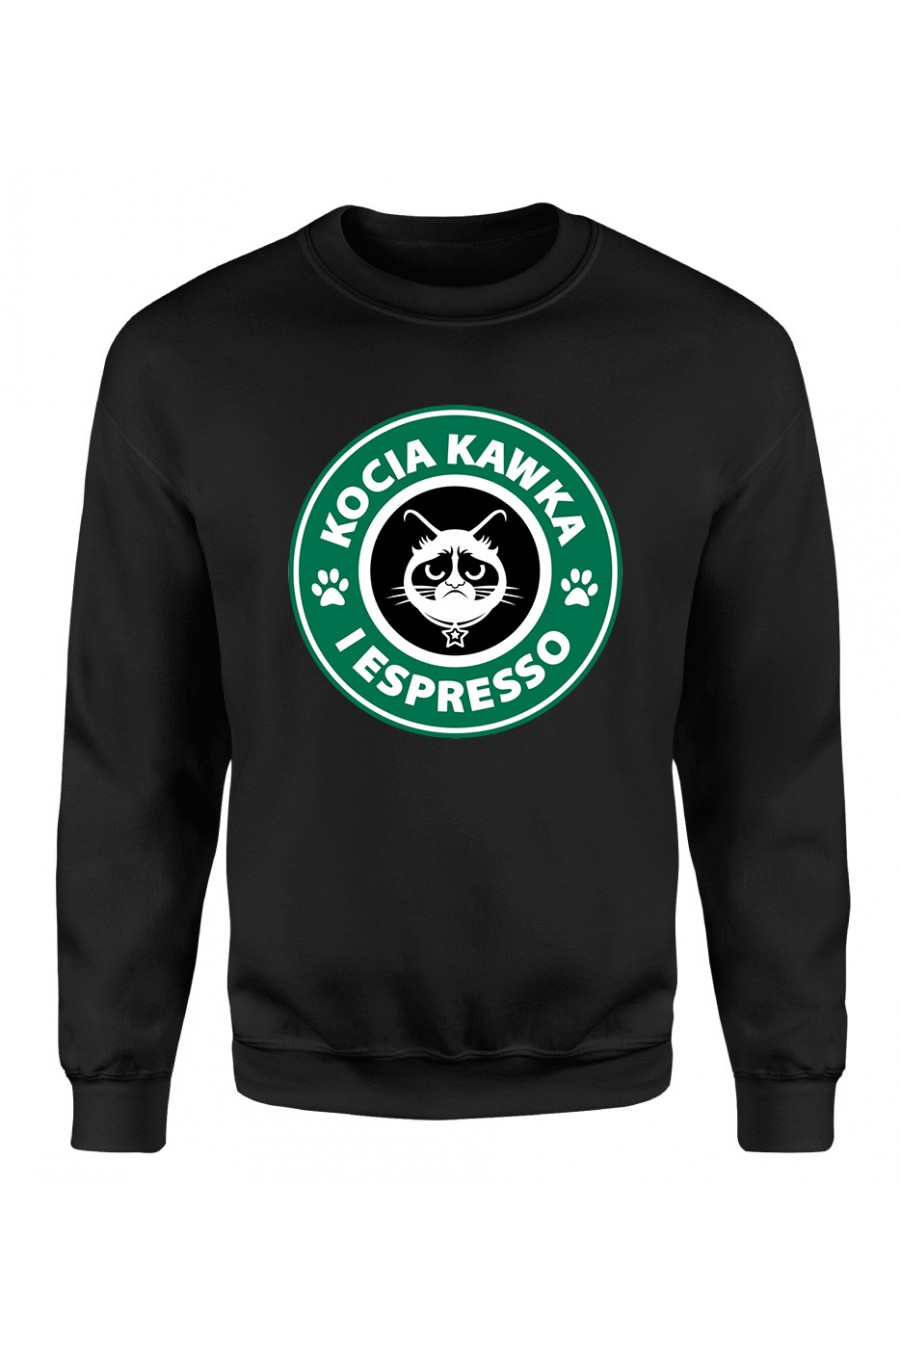 Bluza Klasyczna Męska Kocia Kawka I Espresso 2